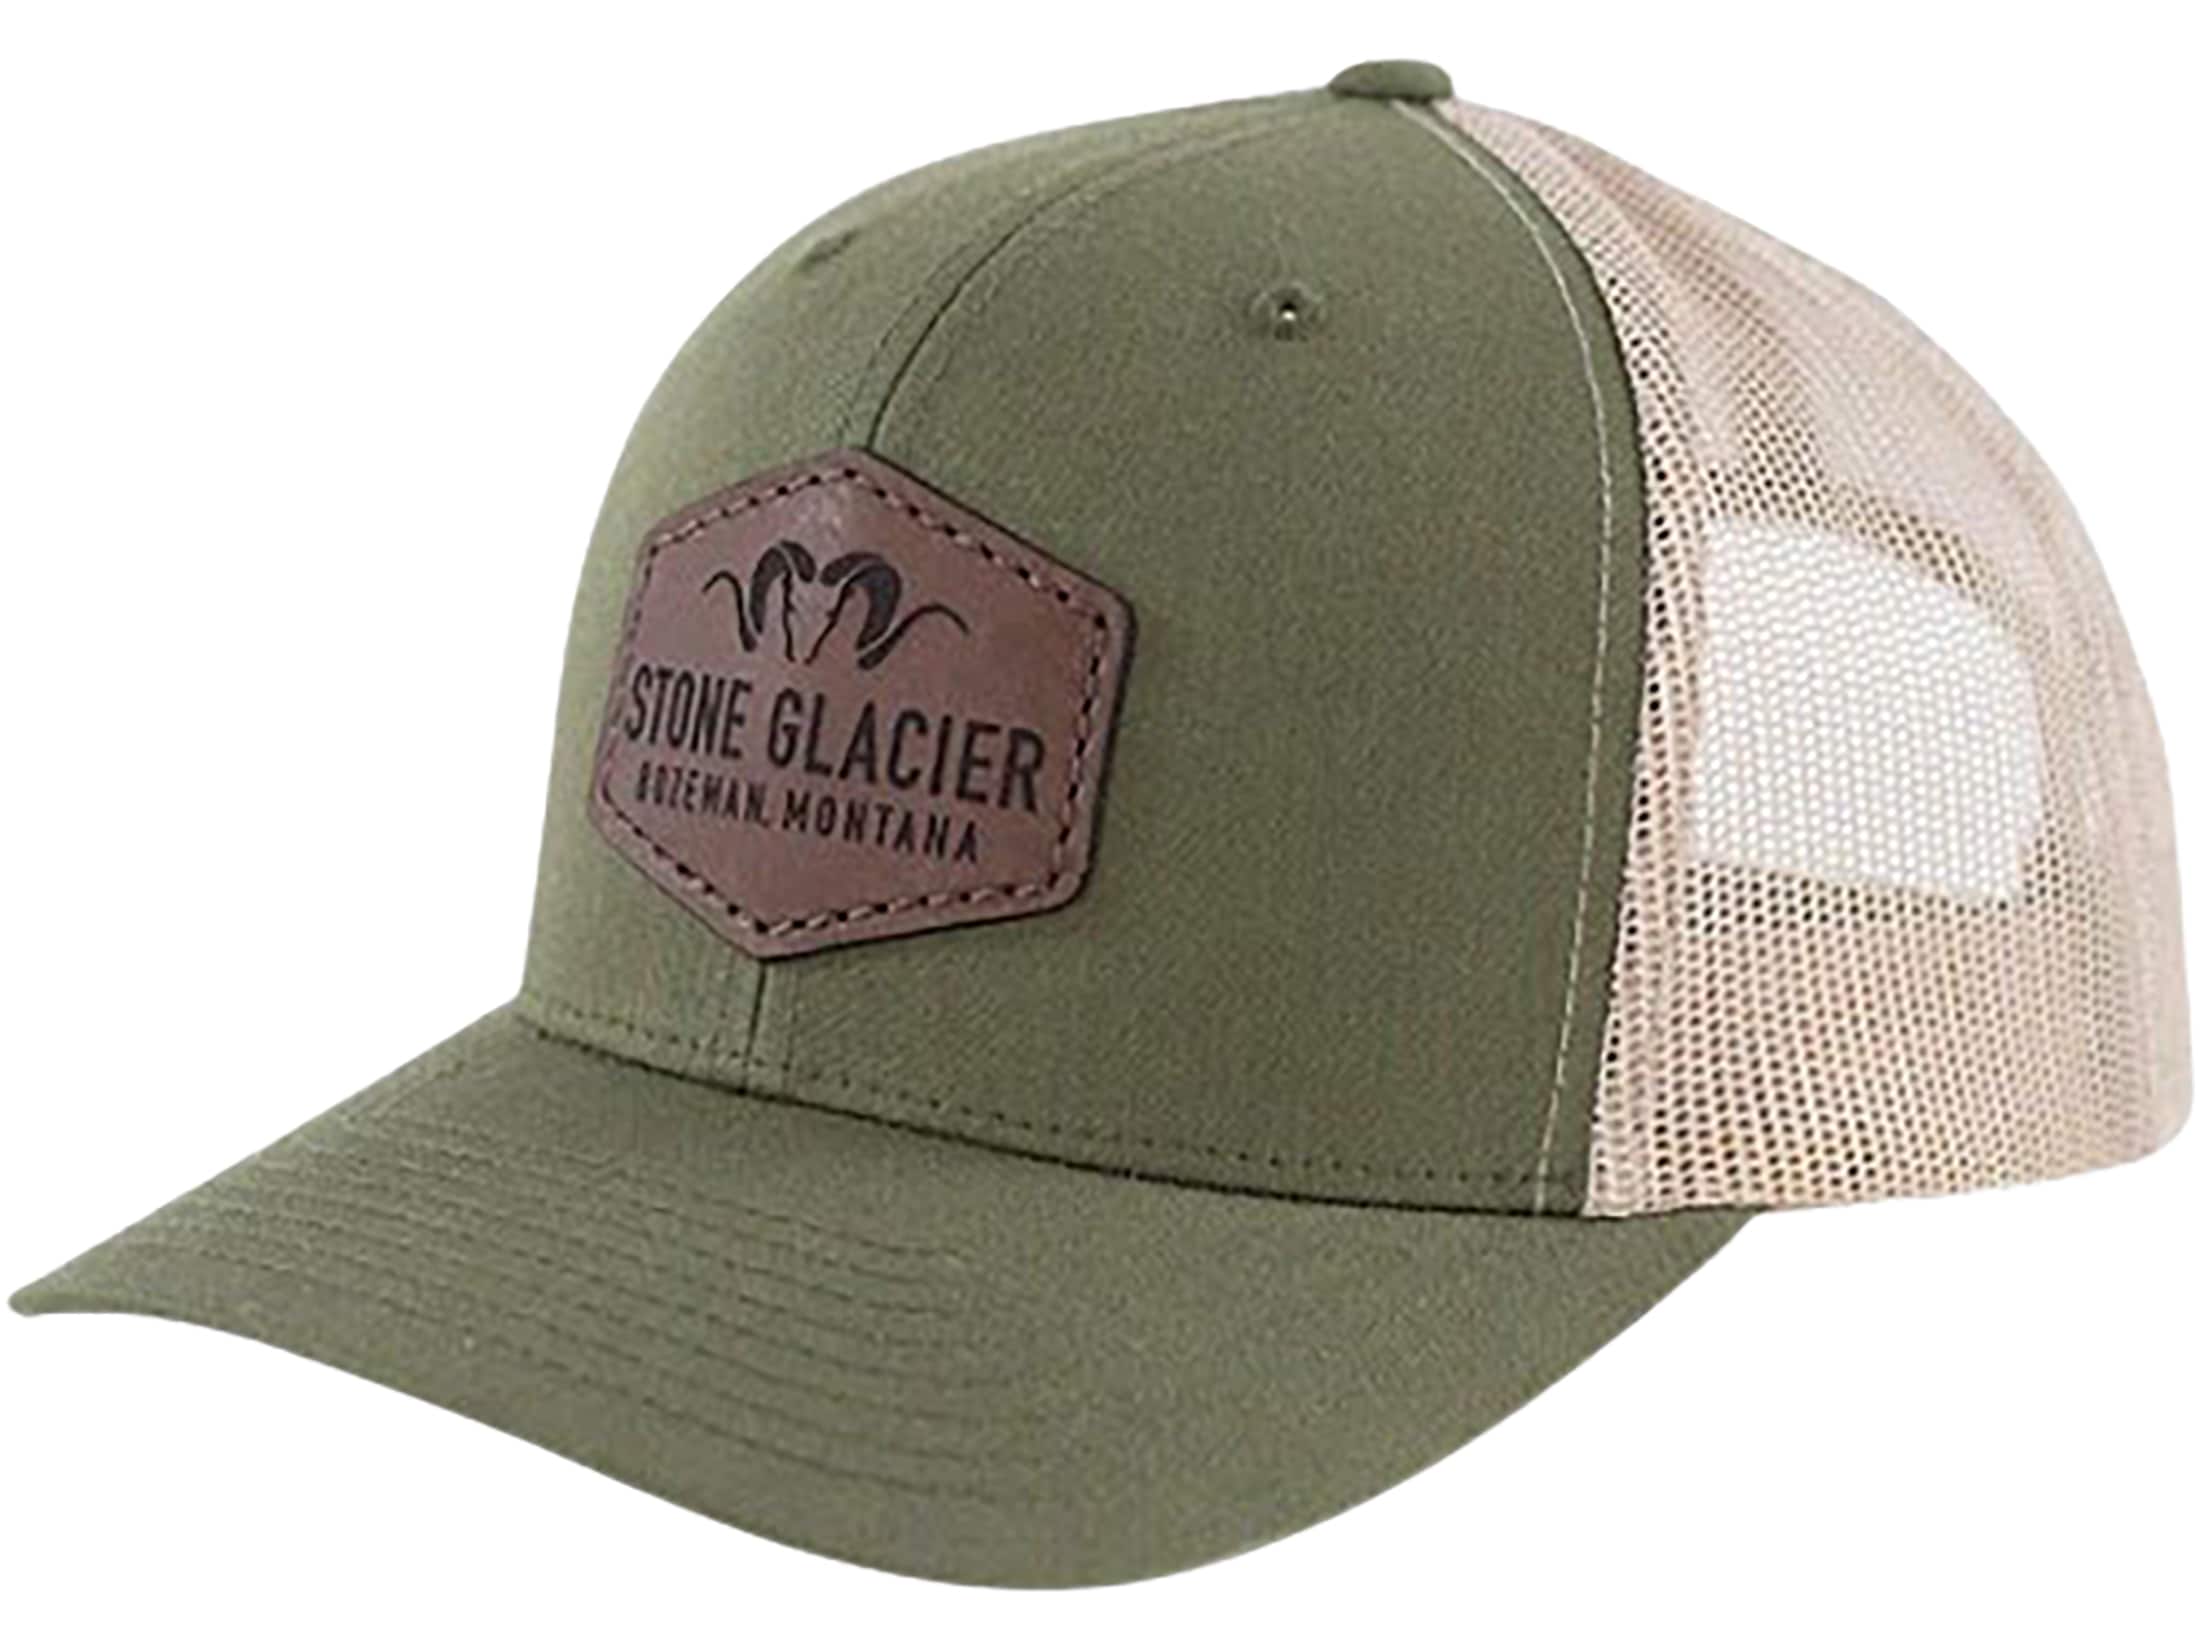 Stone Glacier Men's Leather Patch Trucker Hat Moss/Khaki One Size Fits